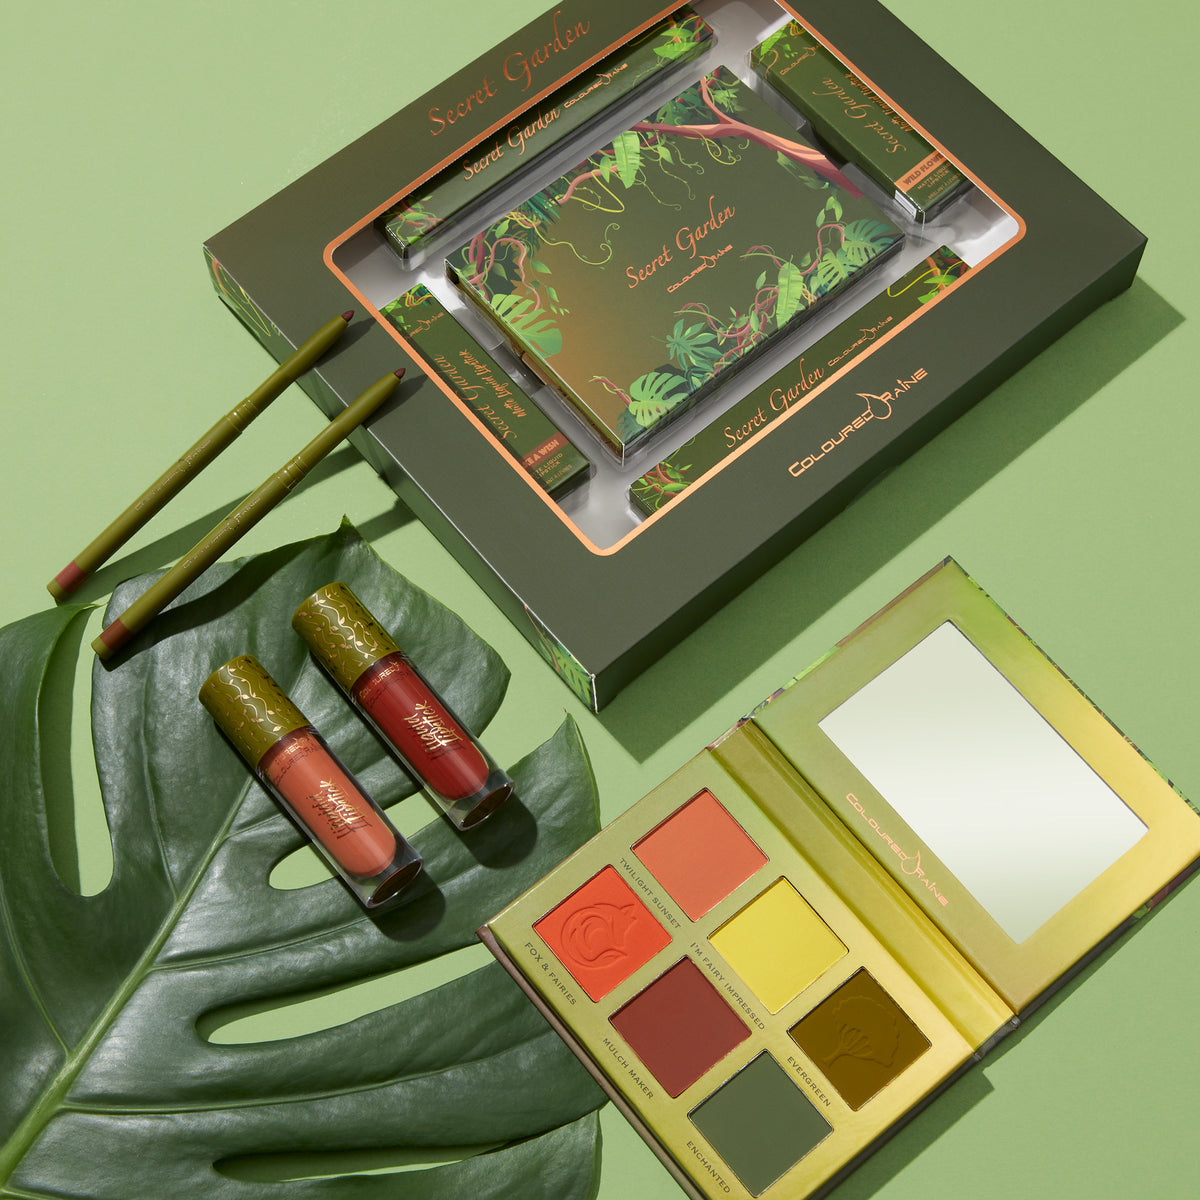 Secret Garden Collection - Coloured Raine Cosmetics